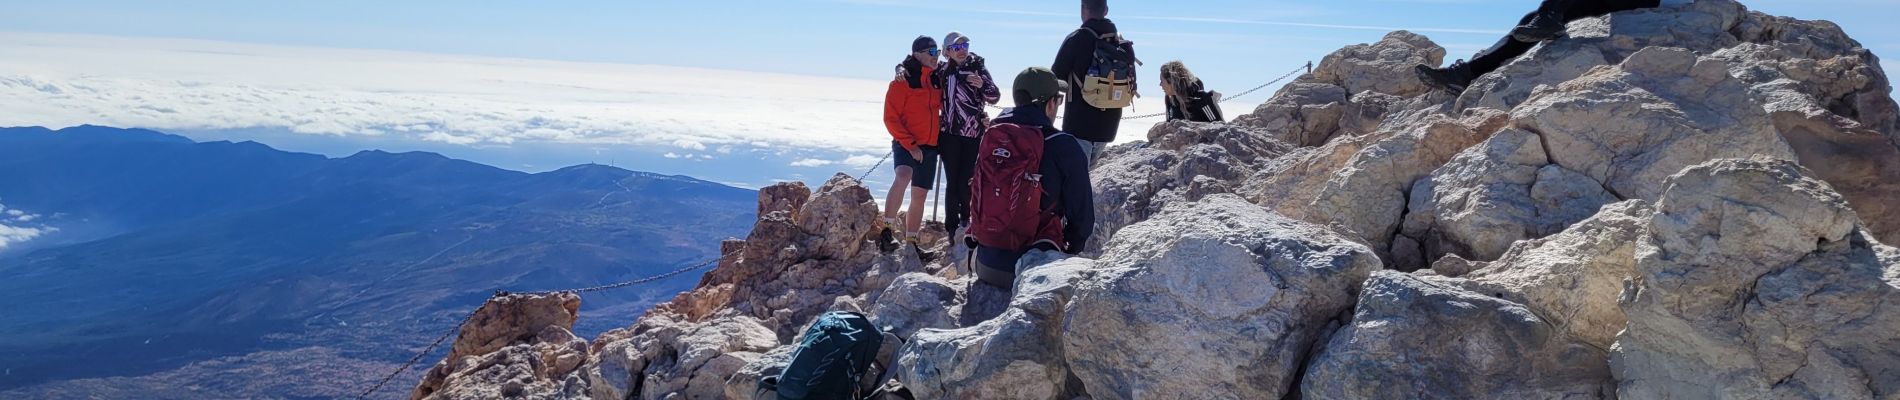 Excursión Senderismo La Orotava - Sommet du Teide - Photo